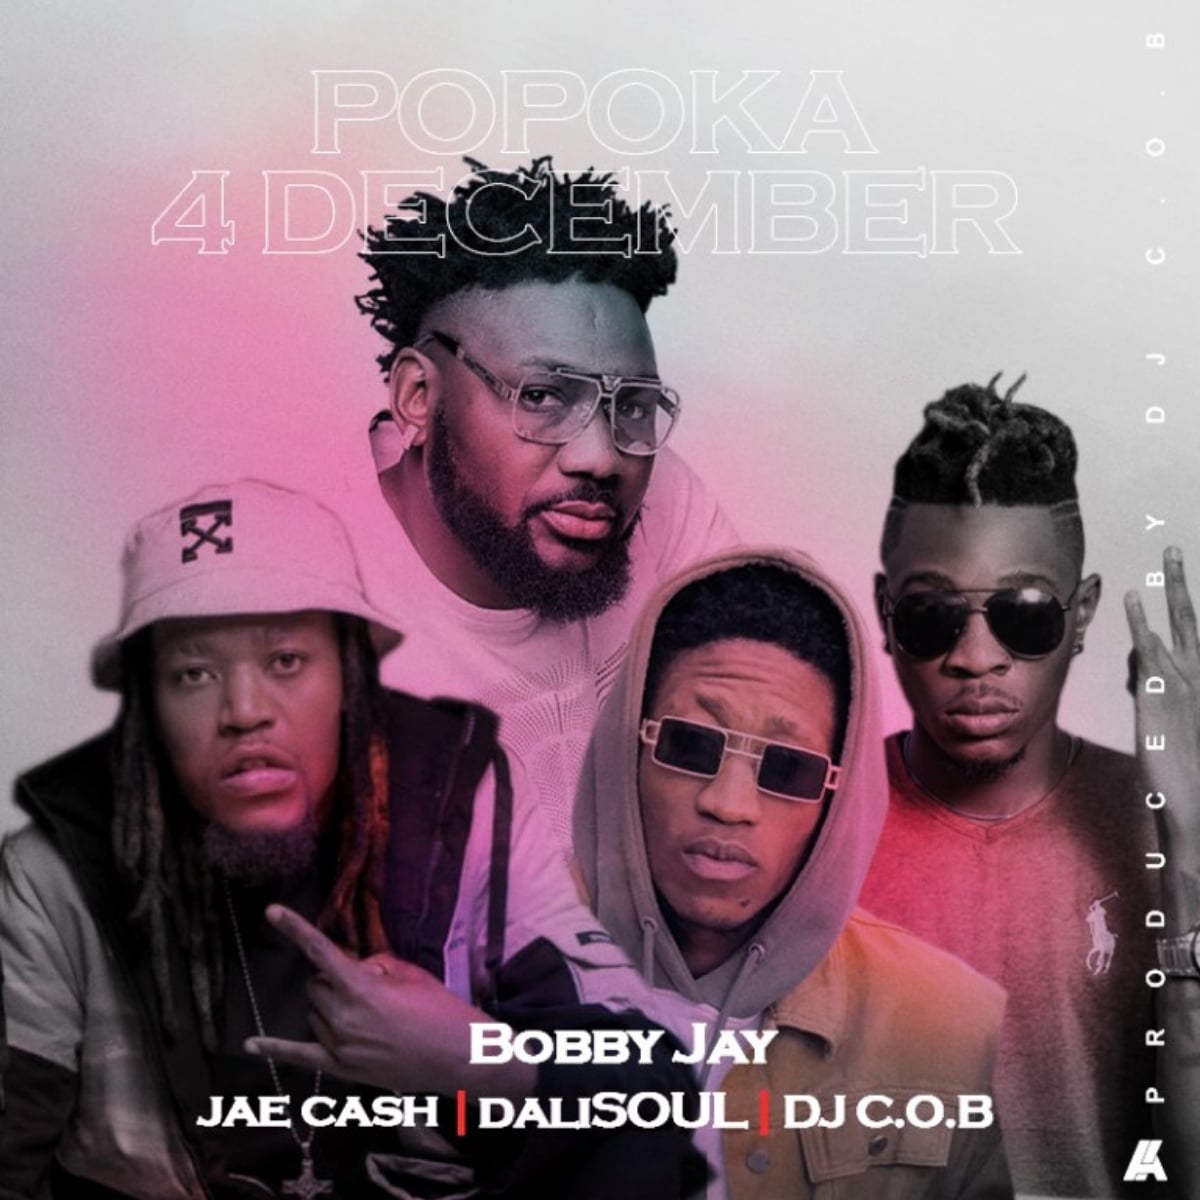 DOWNLOAD: Bobby Jay Ft. Dalisoul, DJ C.O.B & Jae Cash – “Popoka December” Mp3